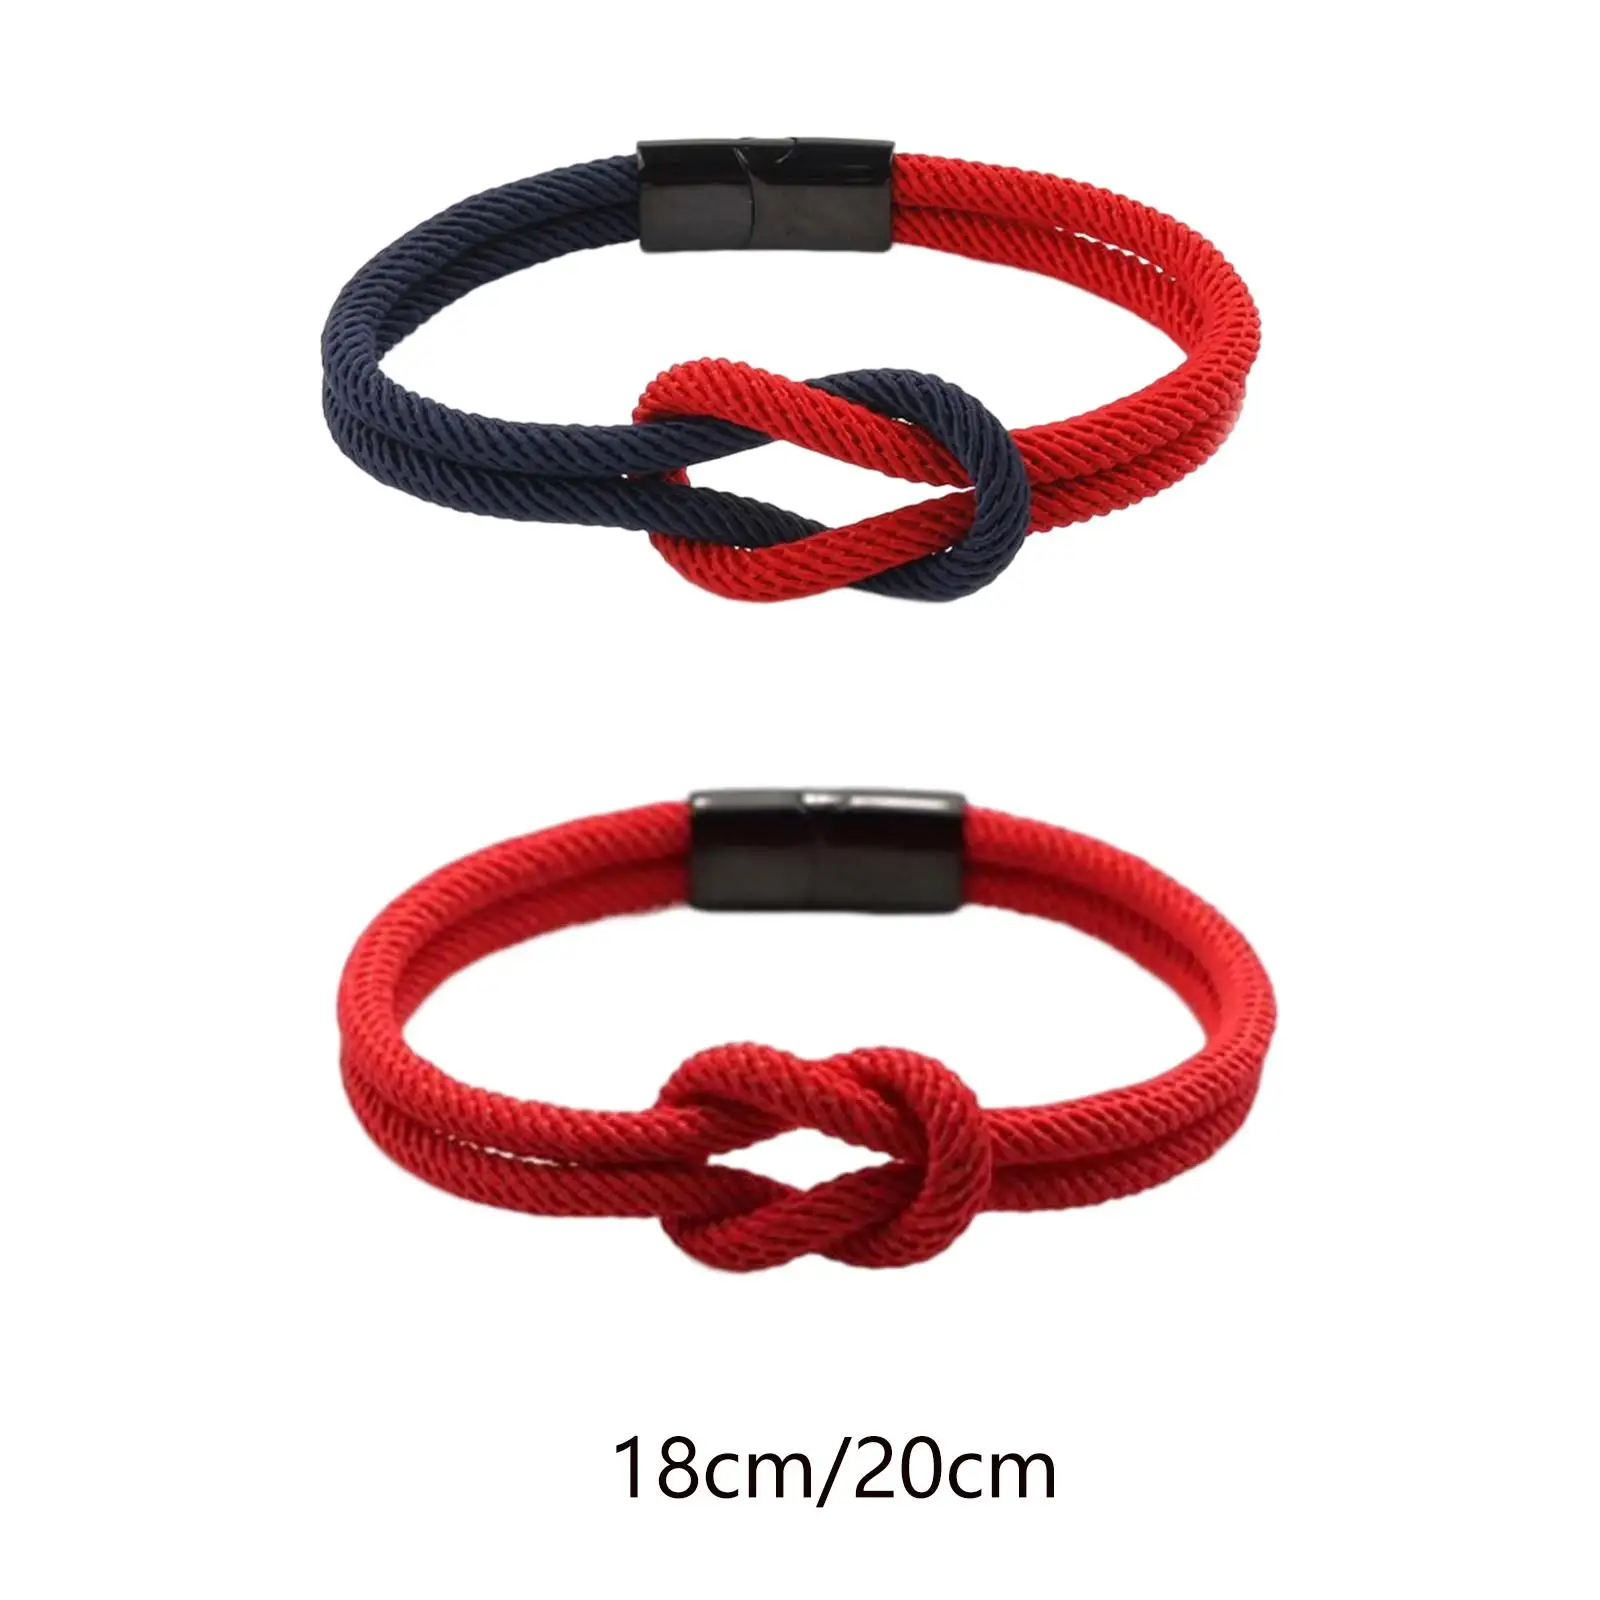 Rope Bracelet Gifts Adjustable for Couples Boyfriends Girlfriends Teens